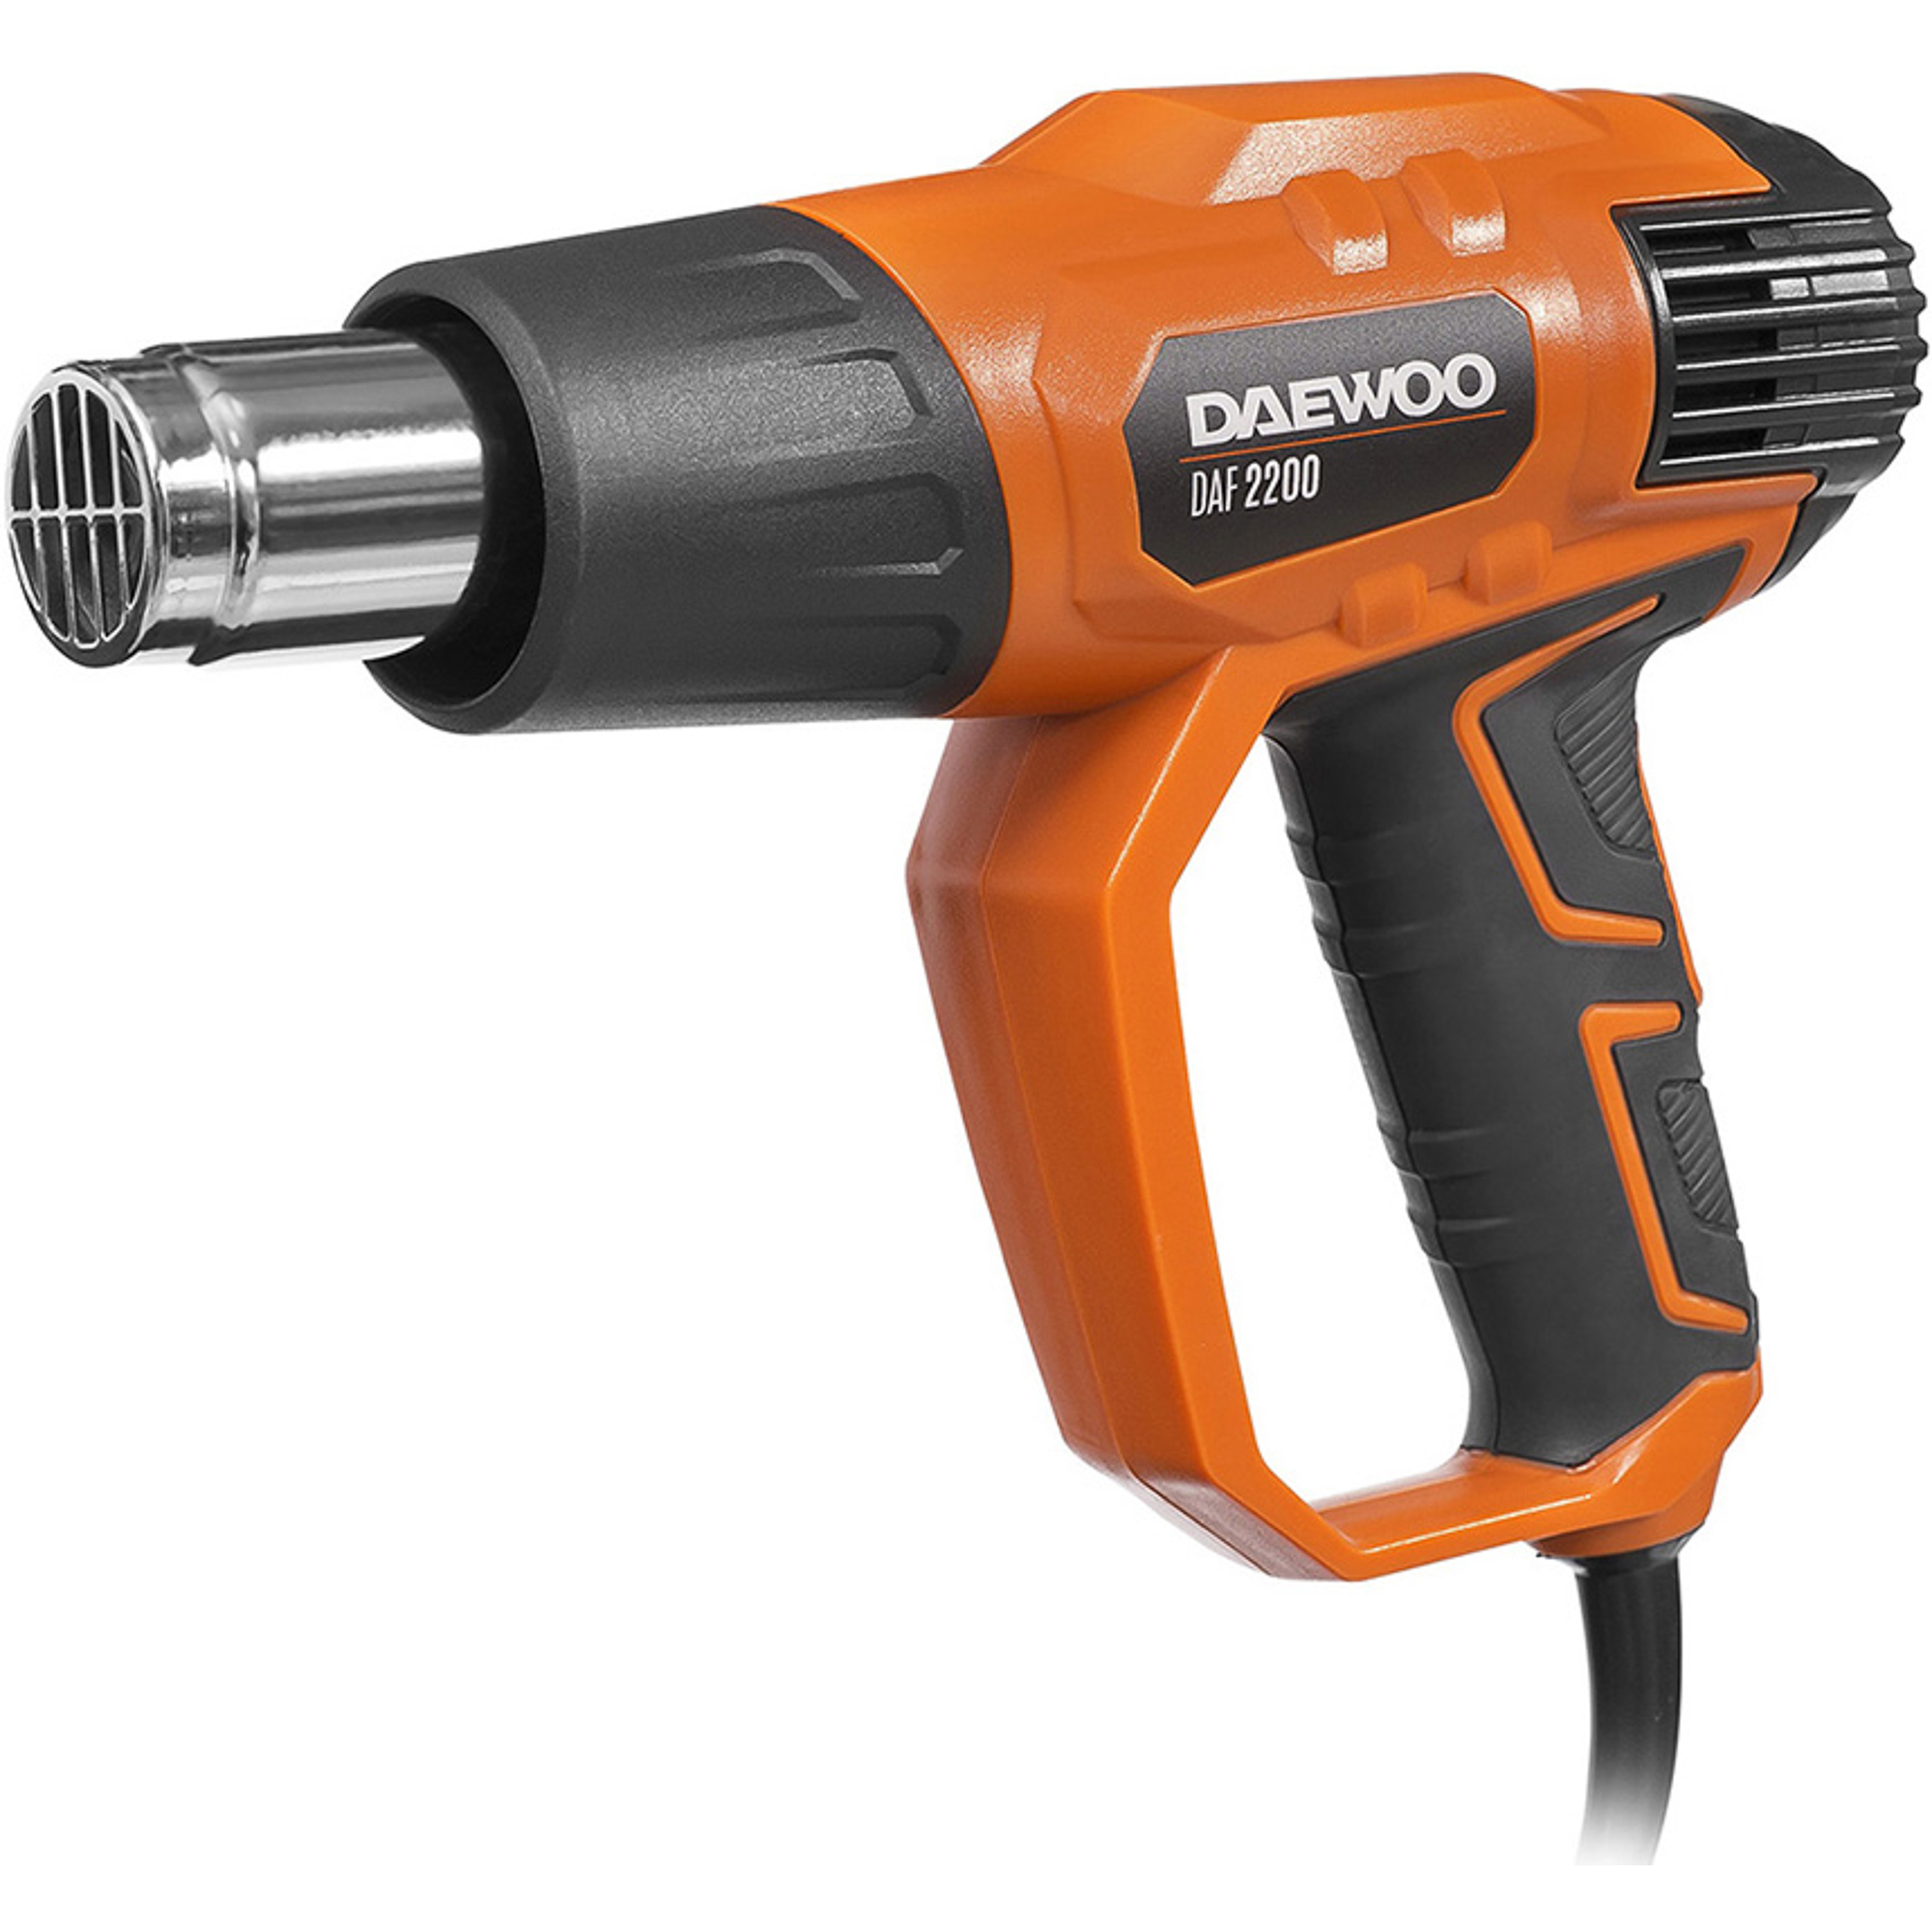 Фен технический Daewoo DAF 2200, цвет оранжевый